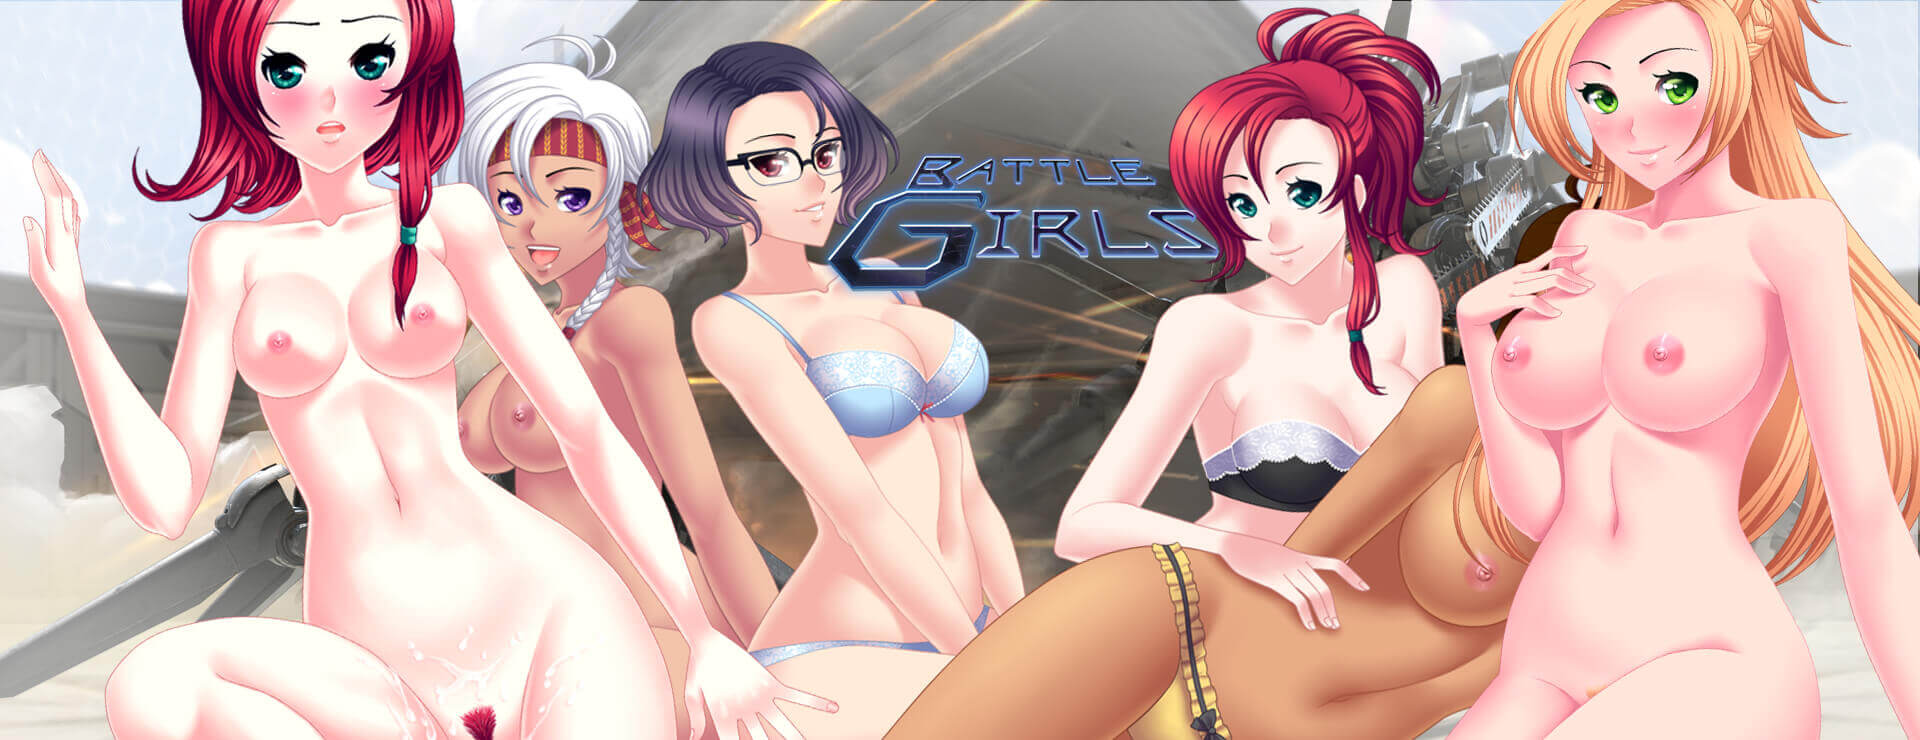 Battle Girls - ビジュアルノベル ゲーム